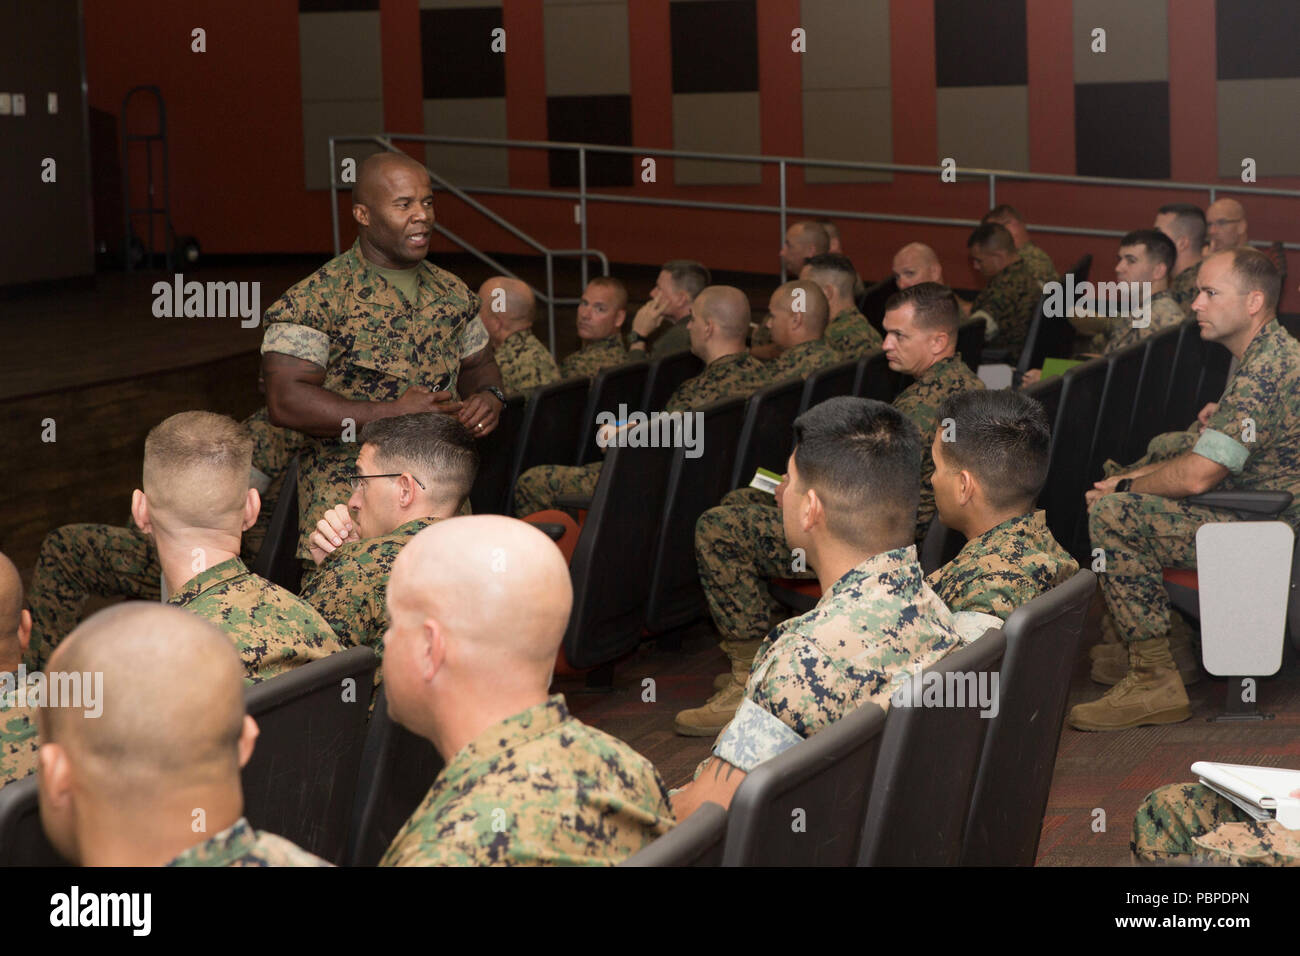 Young Marine Sergeant Major Fotos e Imágenes de stock - Alamy